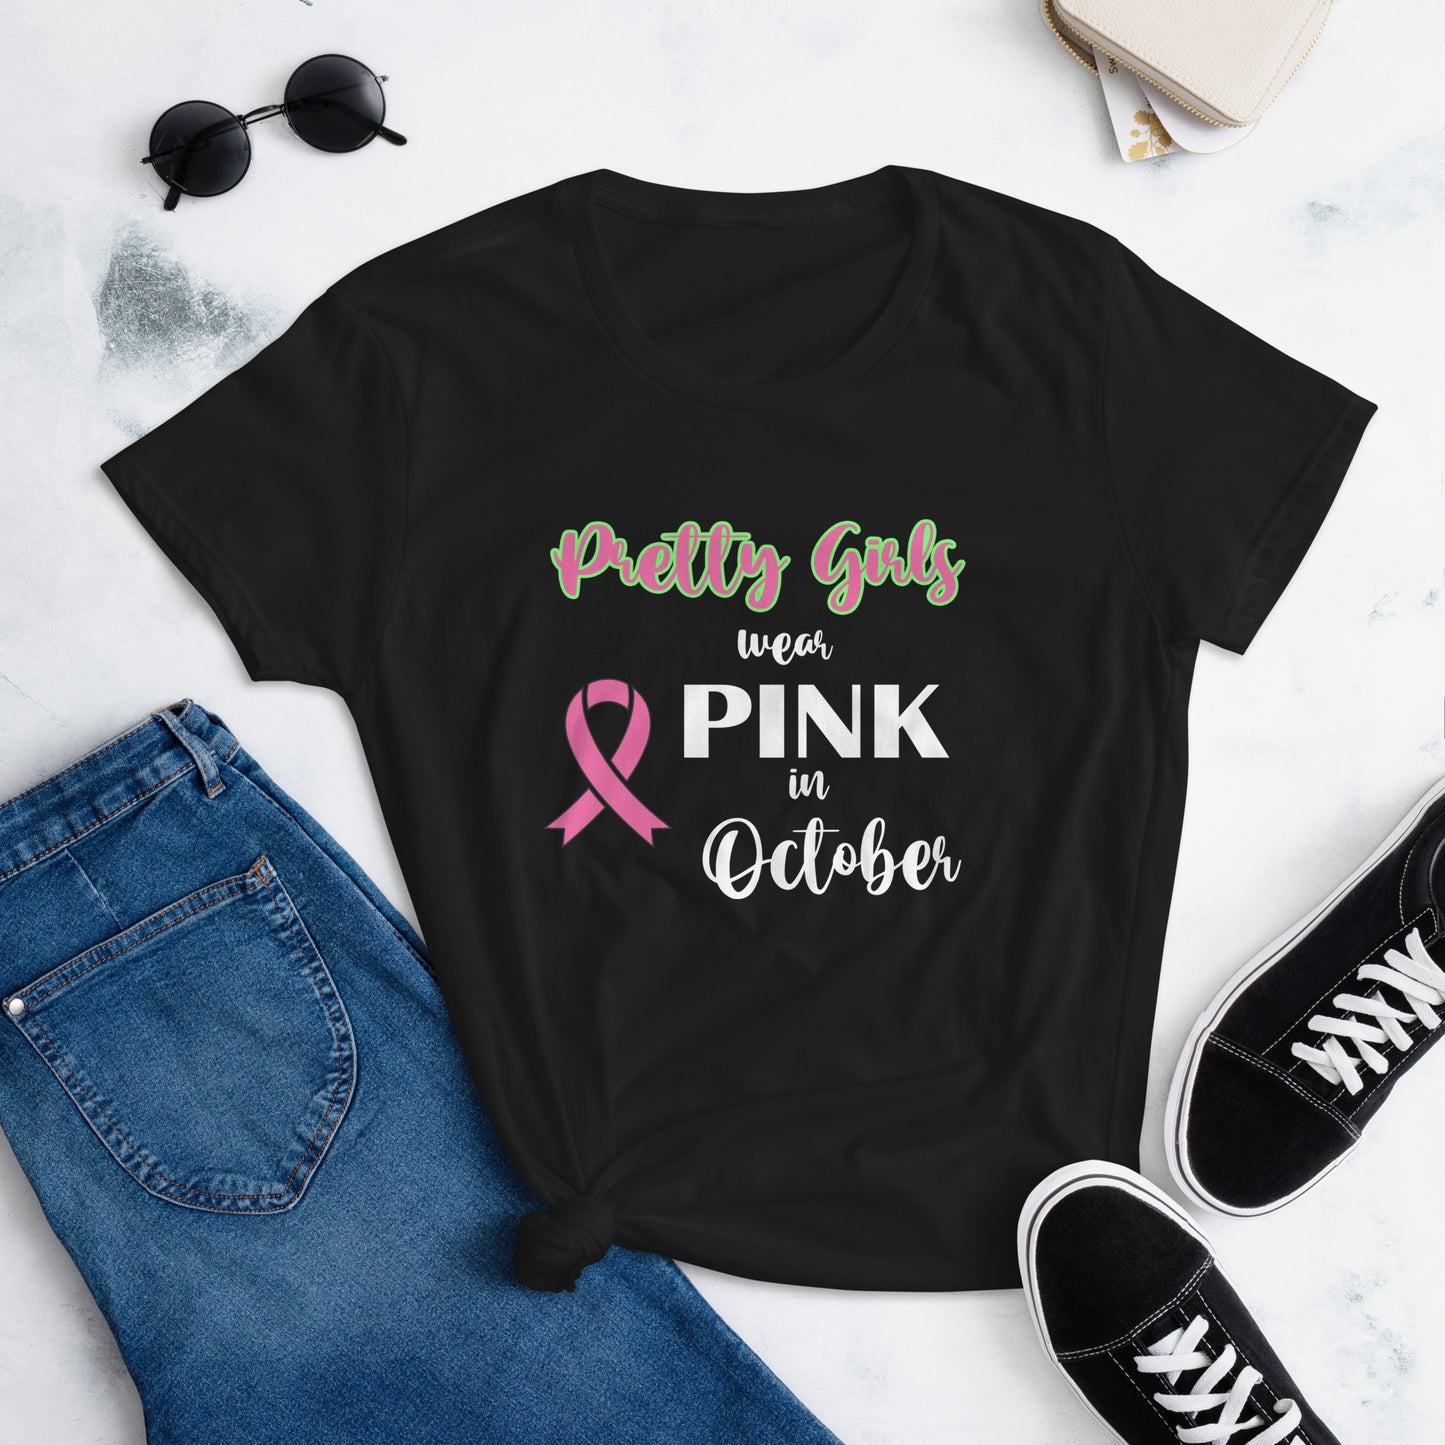 AKAs Wear Pink in October